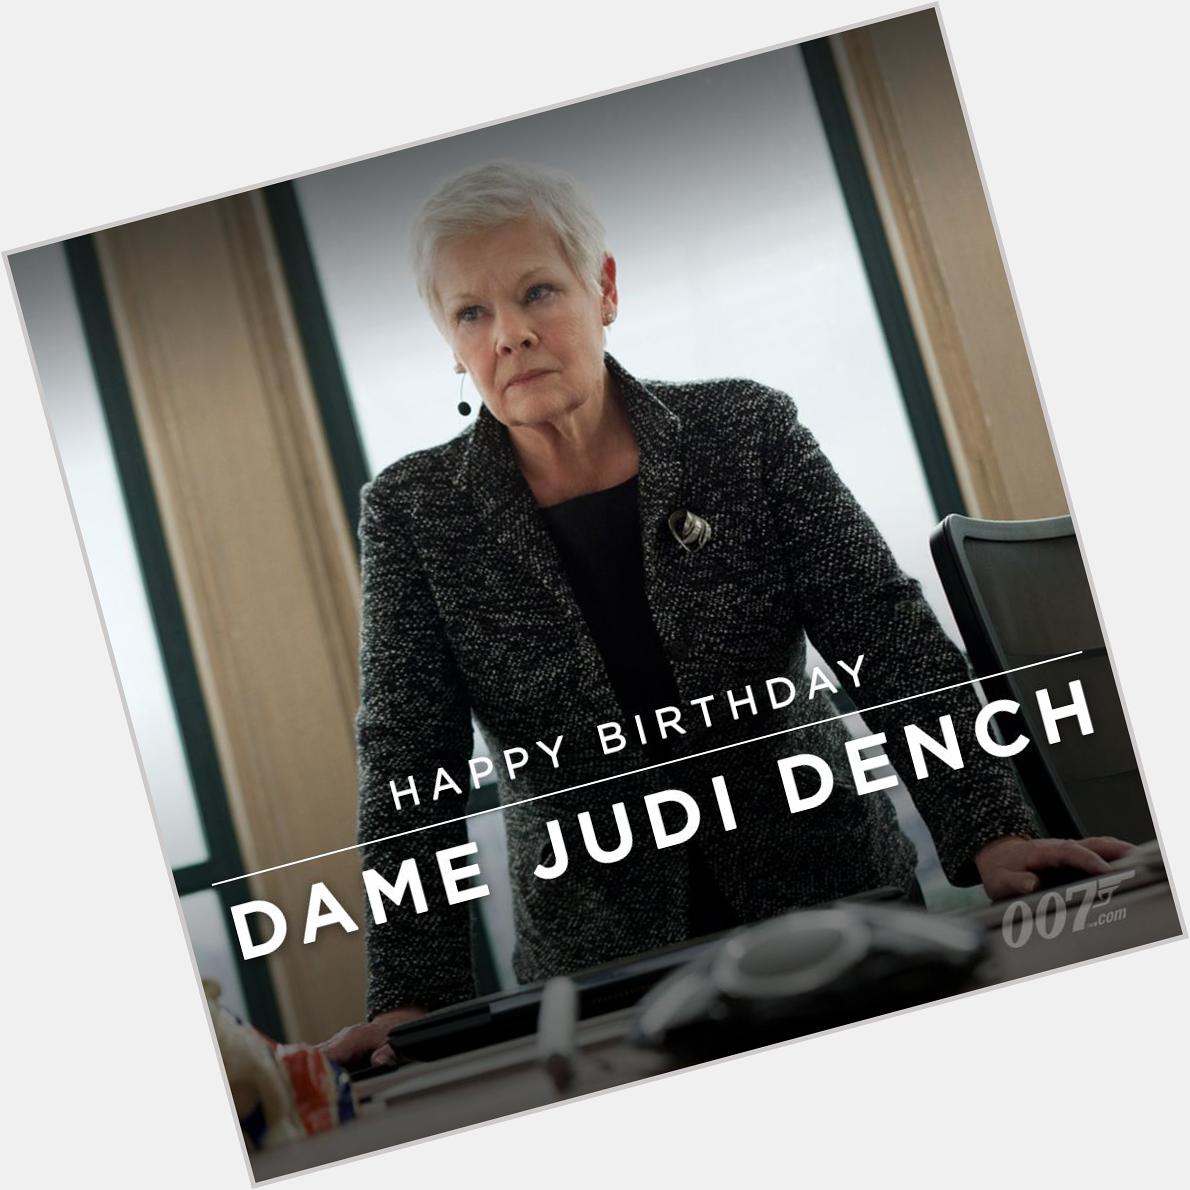 We would like to wish Dame Judi Dench a very happy birthday 